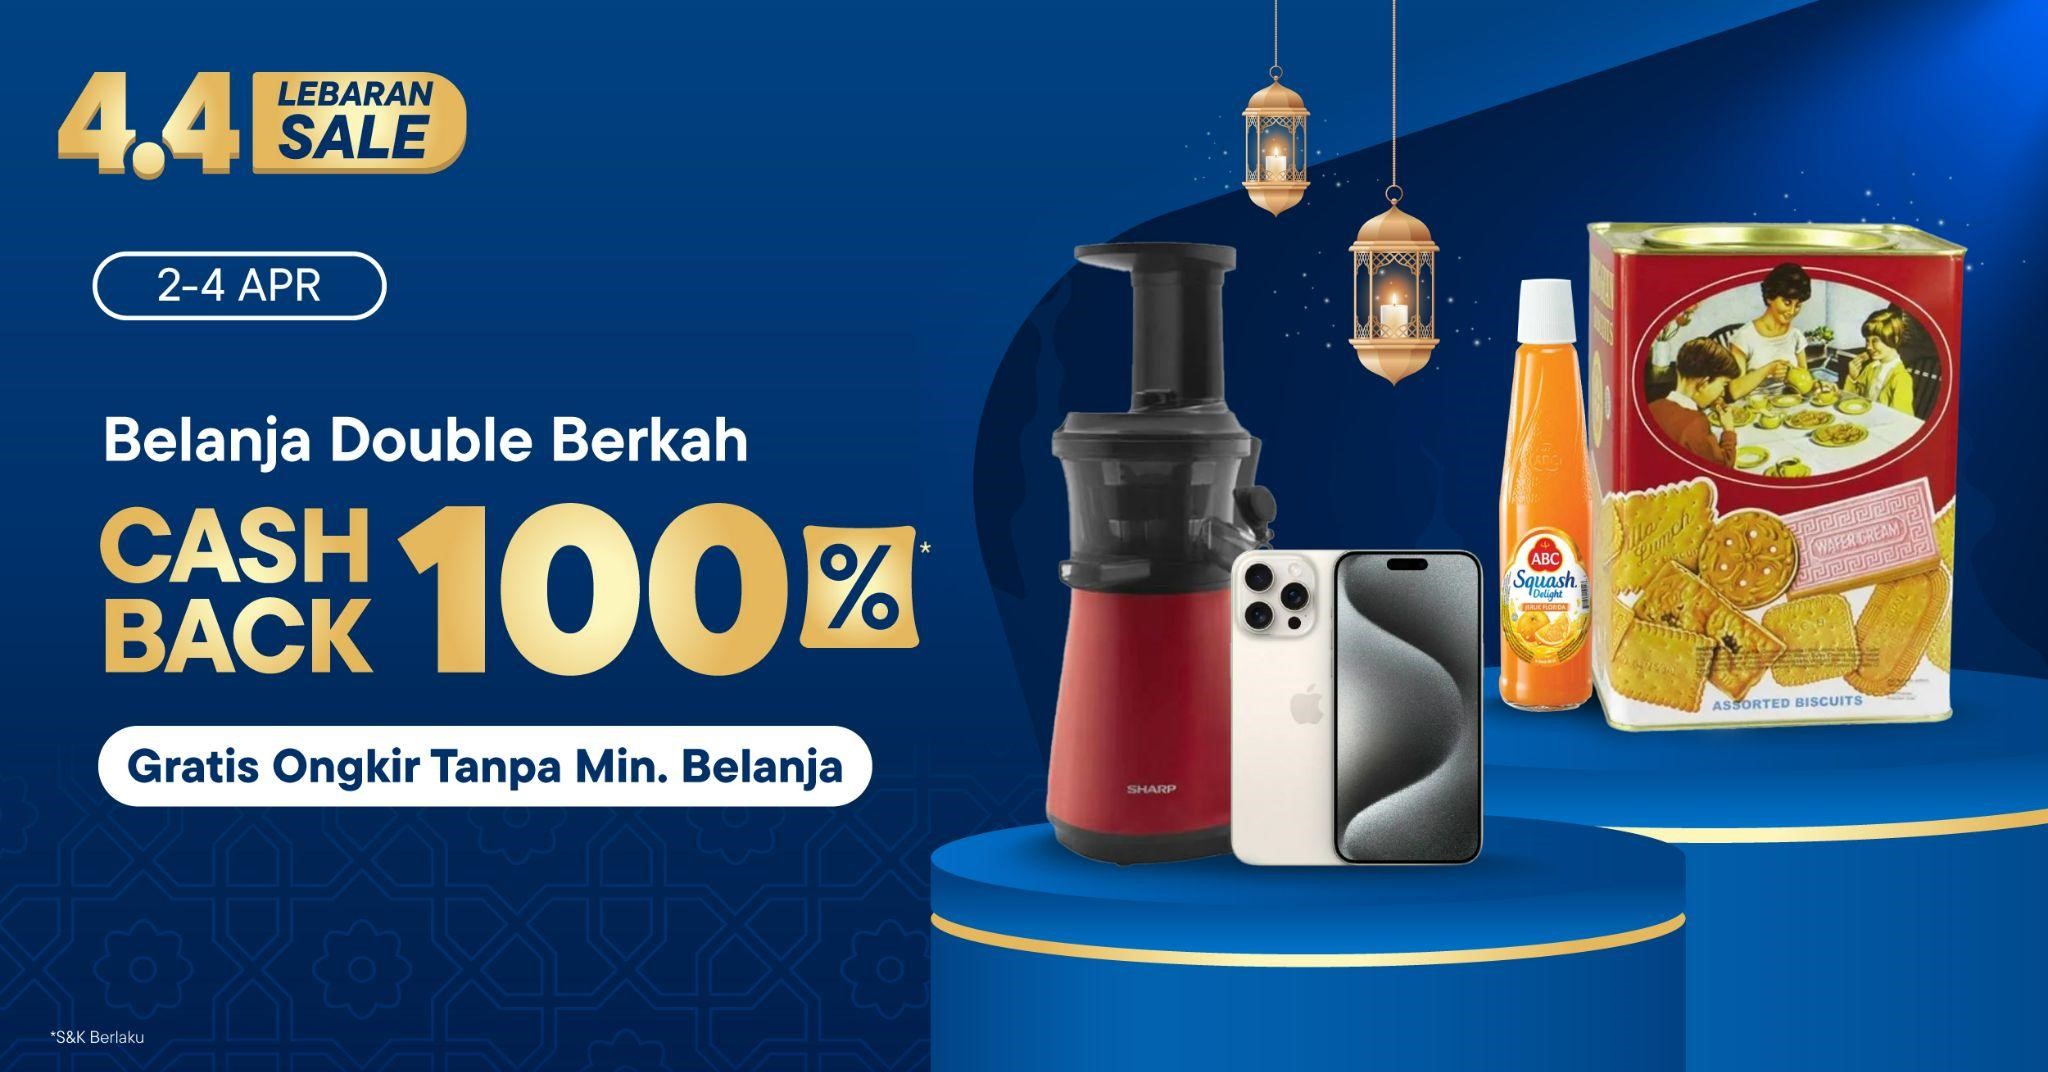 Berbagi Berkah dan Hadiah di Bulan Ramadhan dengan Promo 4.4 Sale dari Blibli